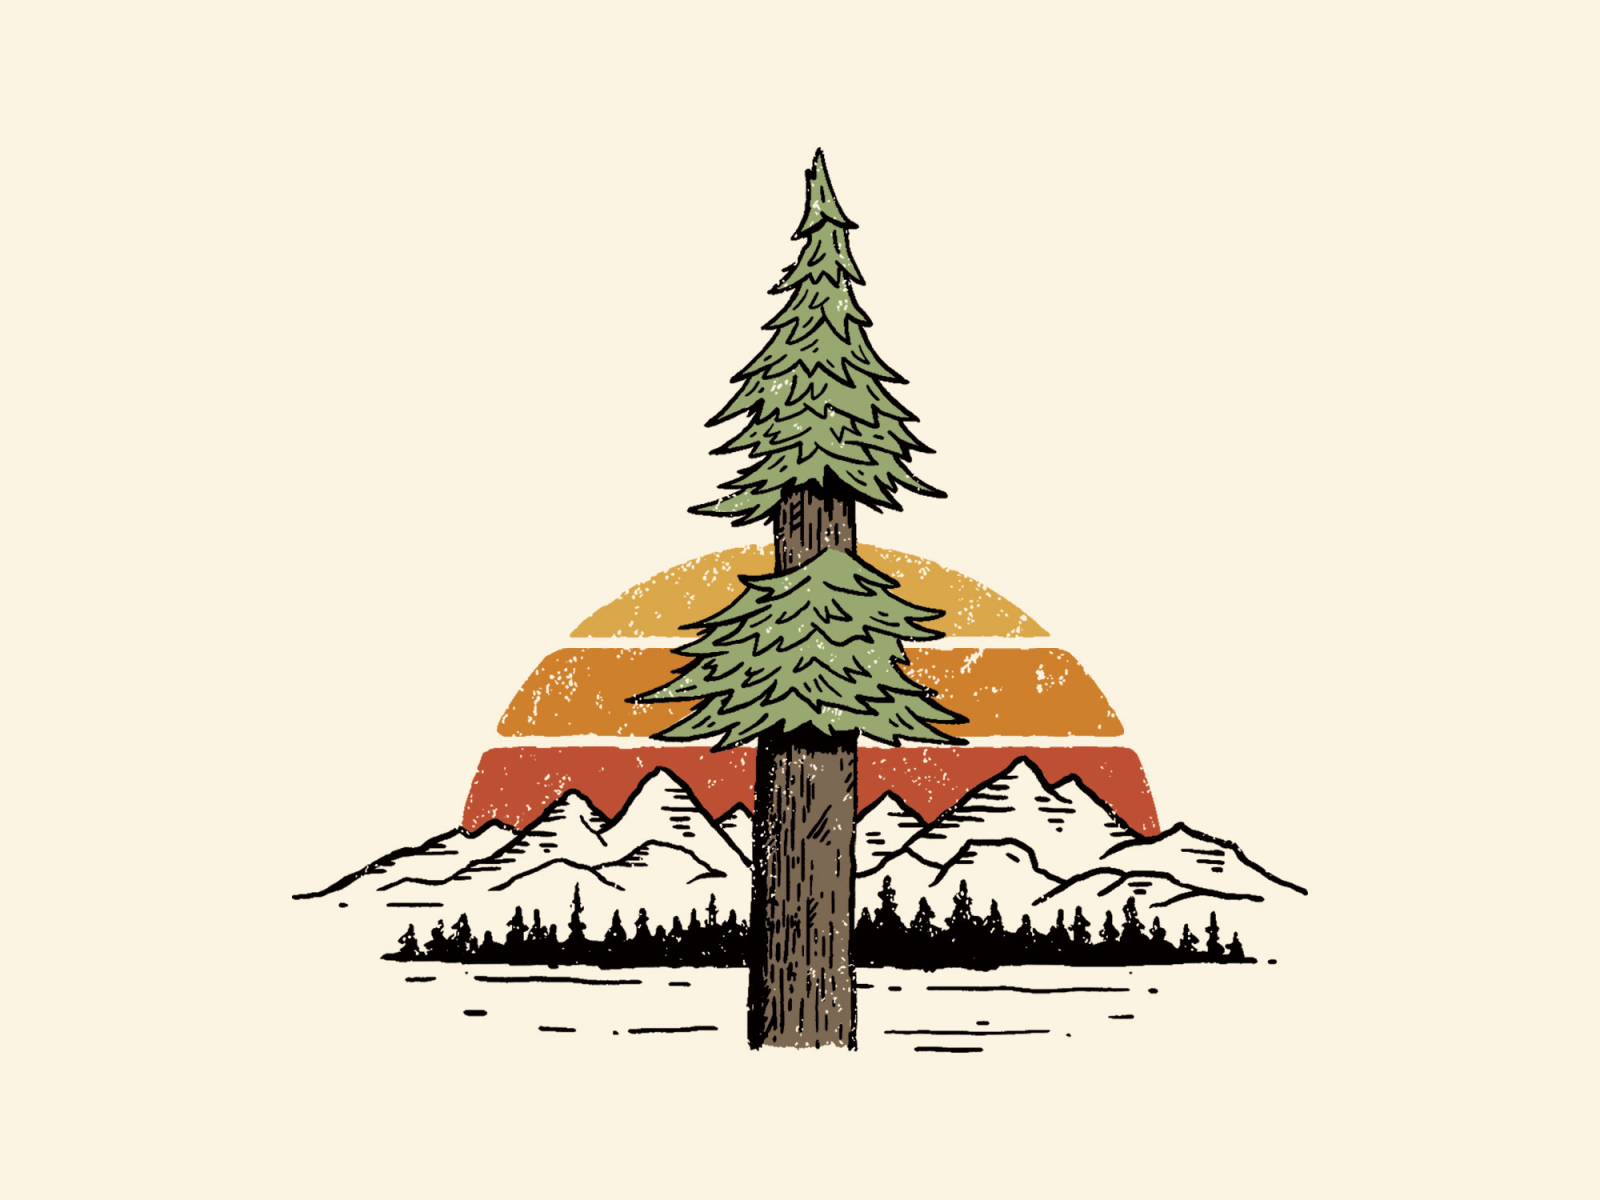 Redwood Tree Illustration For Woodline Apparel By Wildwood Design Co On Dribbble